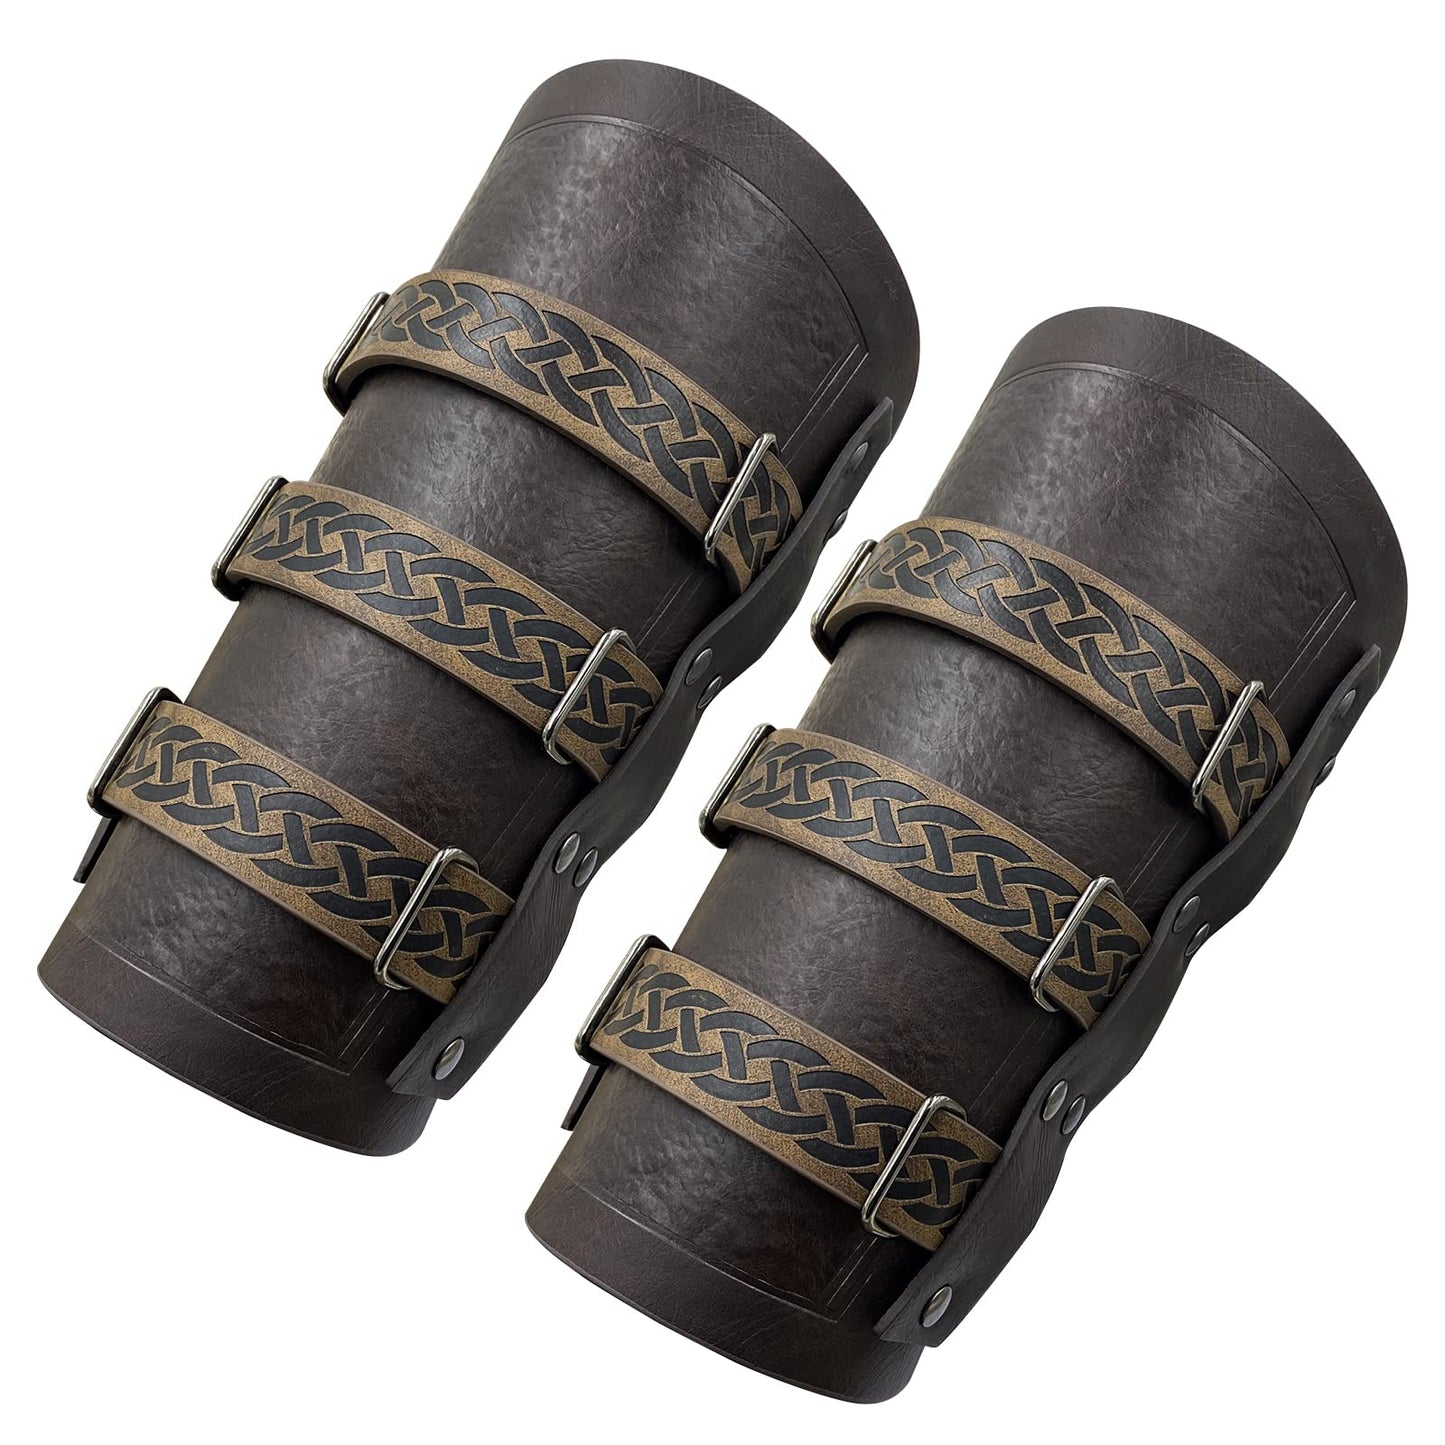 Leather Gauntlet Wristband Medieval Bracers Viking Wrist Guards Archery Guards Bracers Wide Arm Armor Cuff for Women Men 2PCS Knight Wrist Bracers